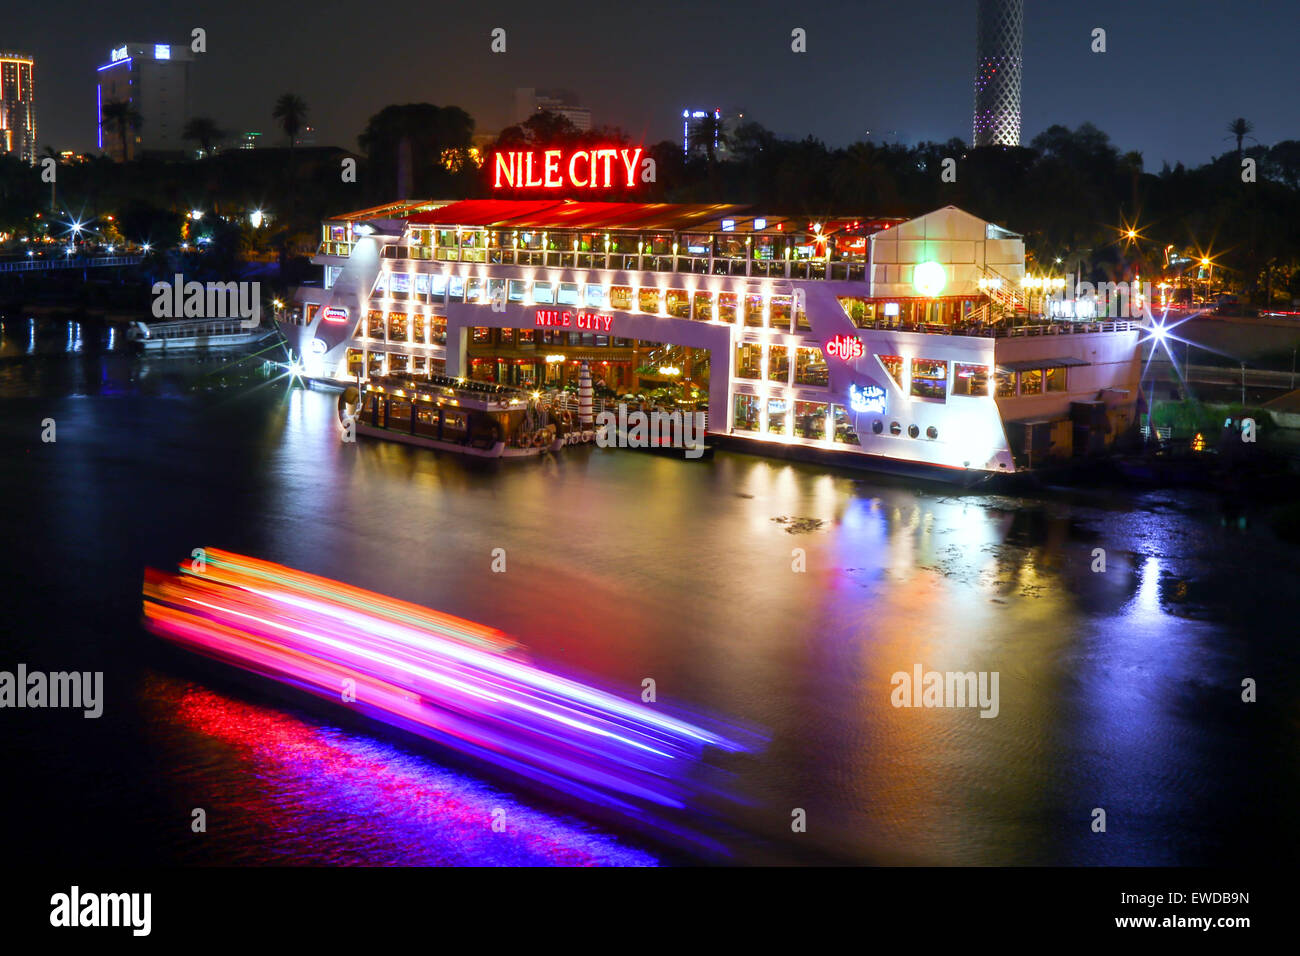 Nile City. Stock Photo